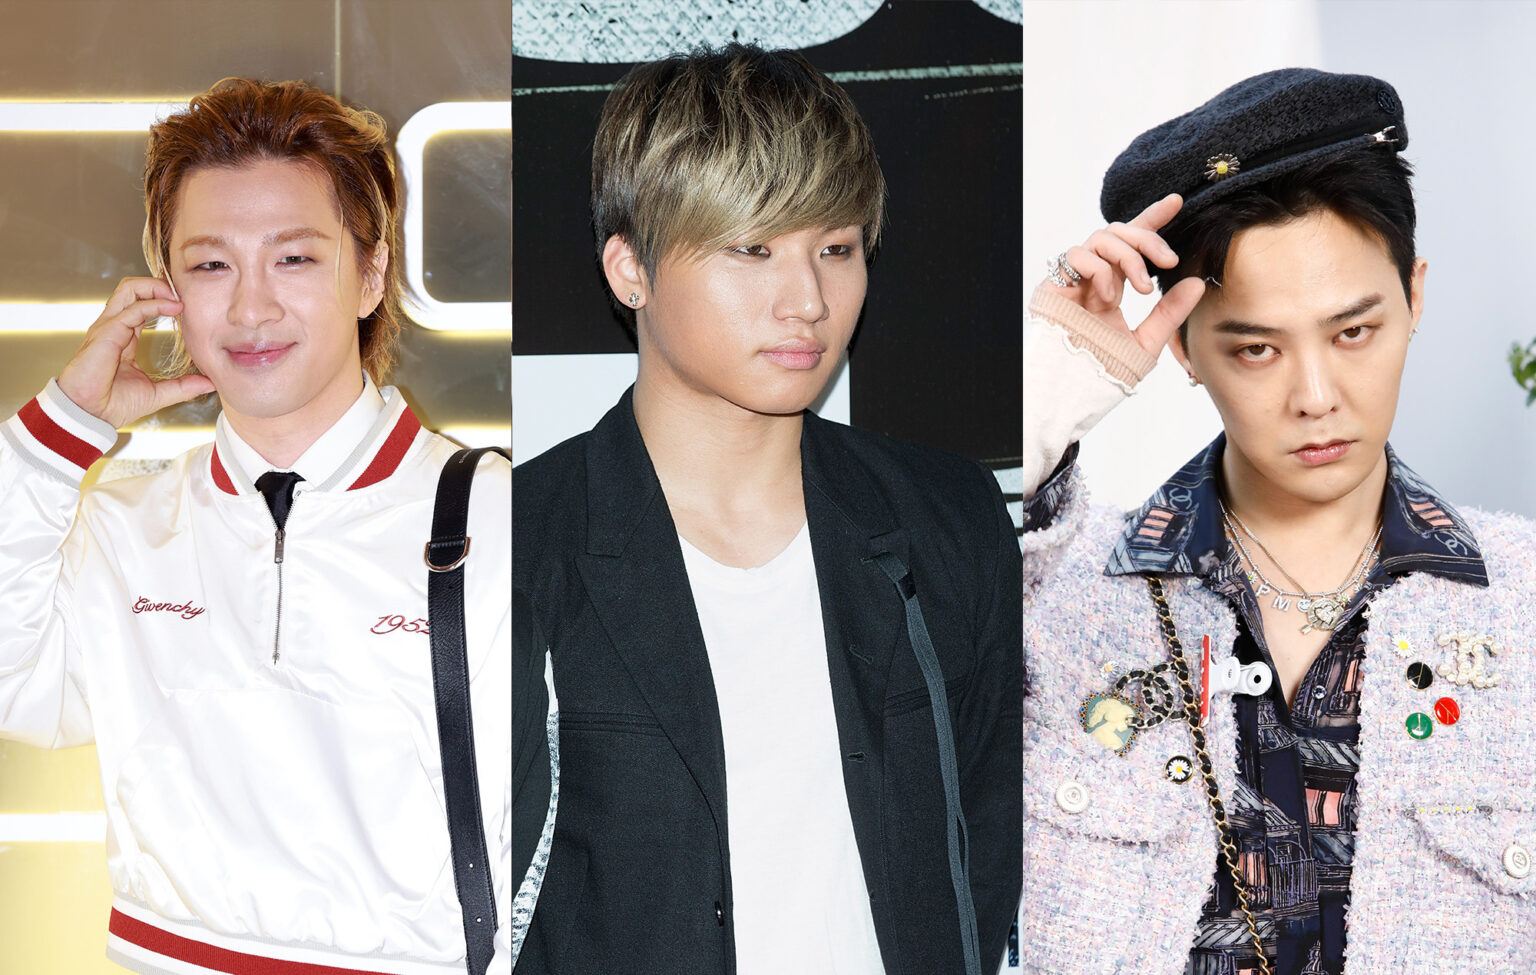 Assista aos membros do Big Bang, Taeyang e Daesung, se reunindo no palco